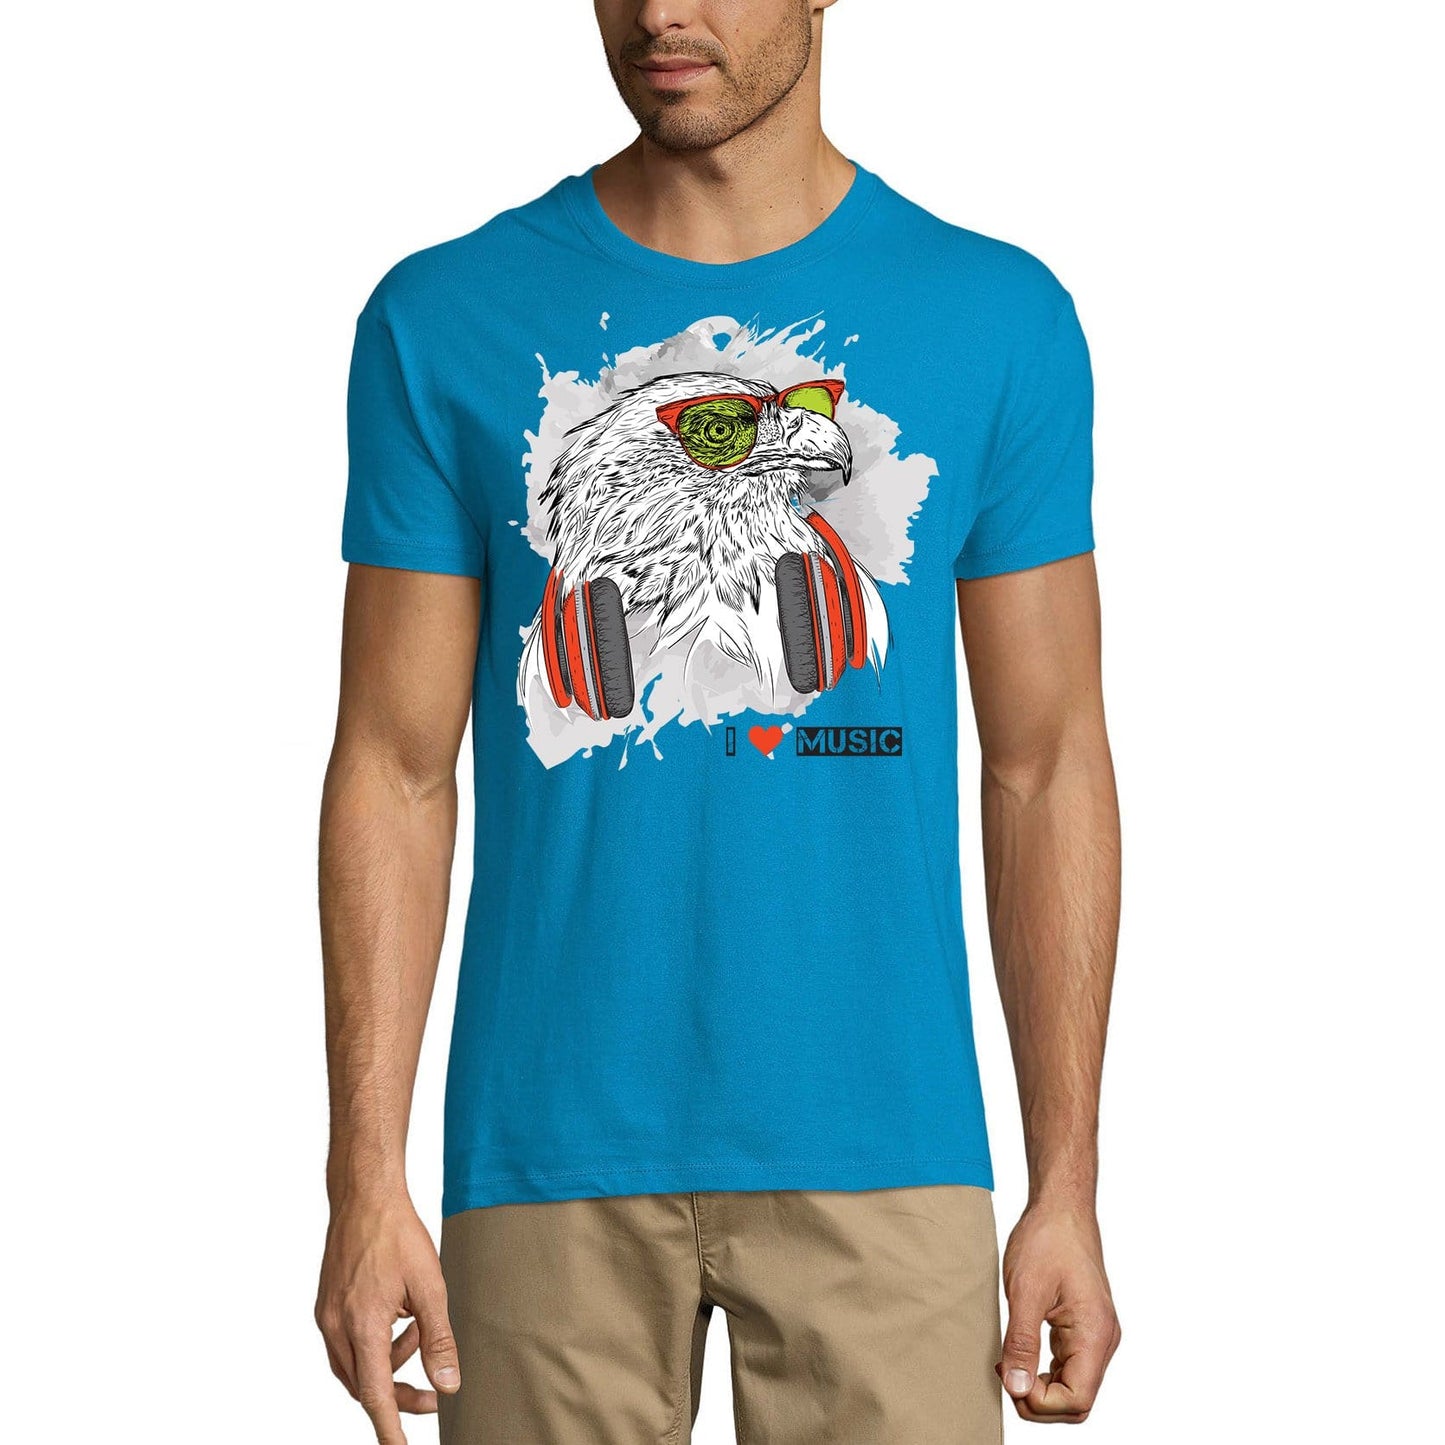 ULTRABASIC Men's T-Shirt Cool Eagle - I Love Music Funny Tee Shirt